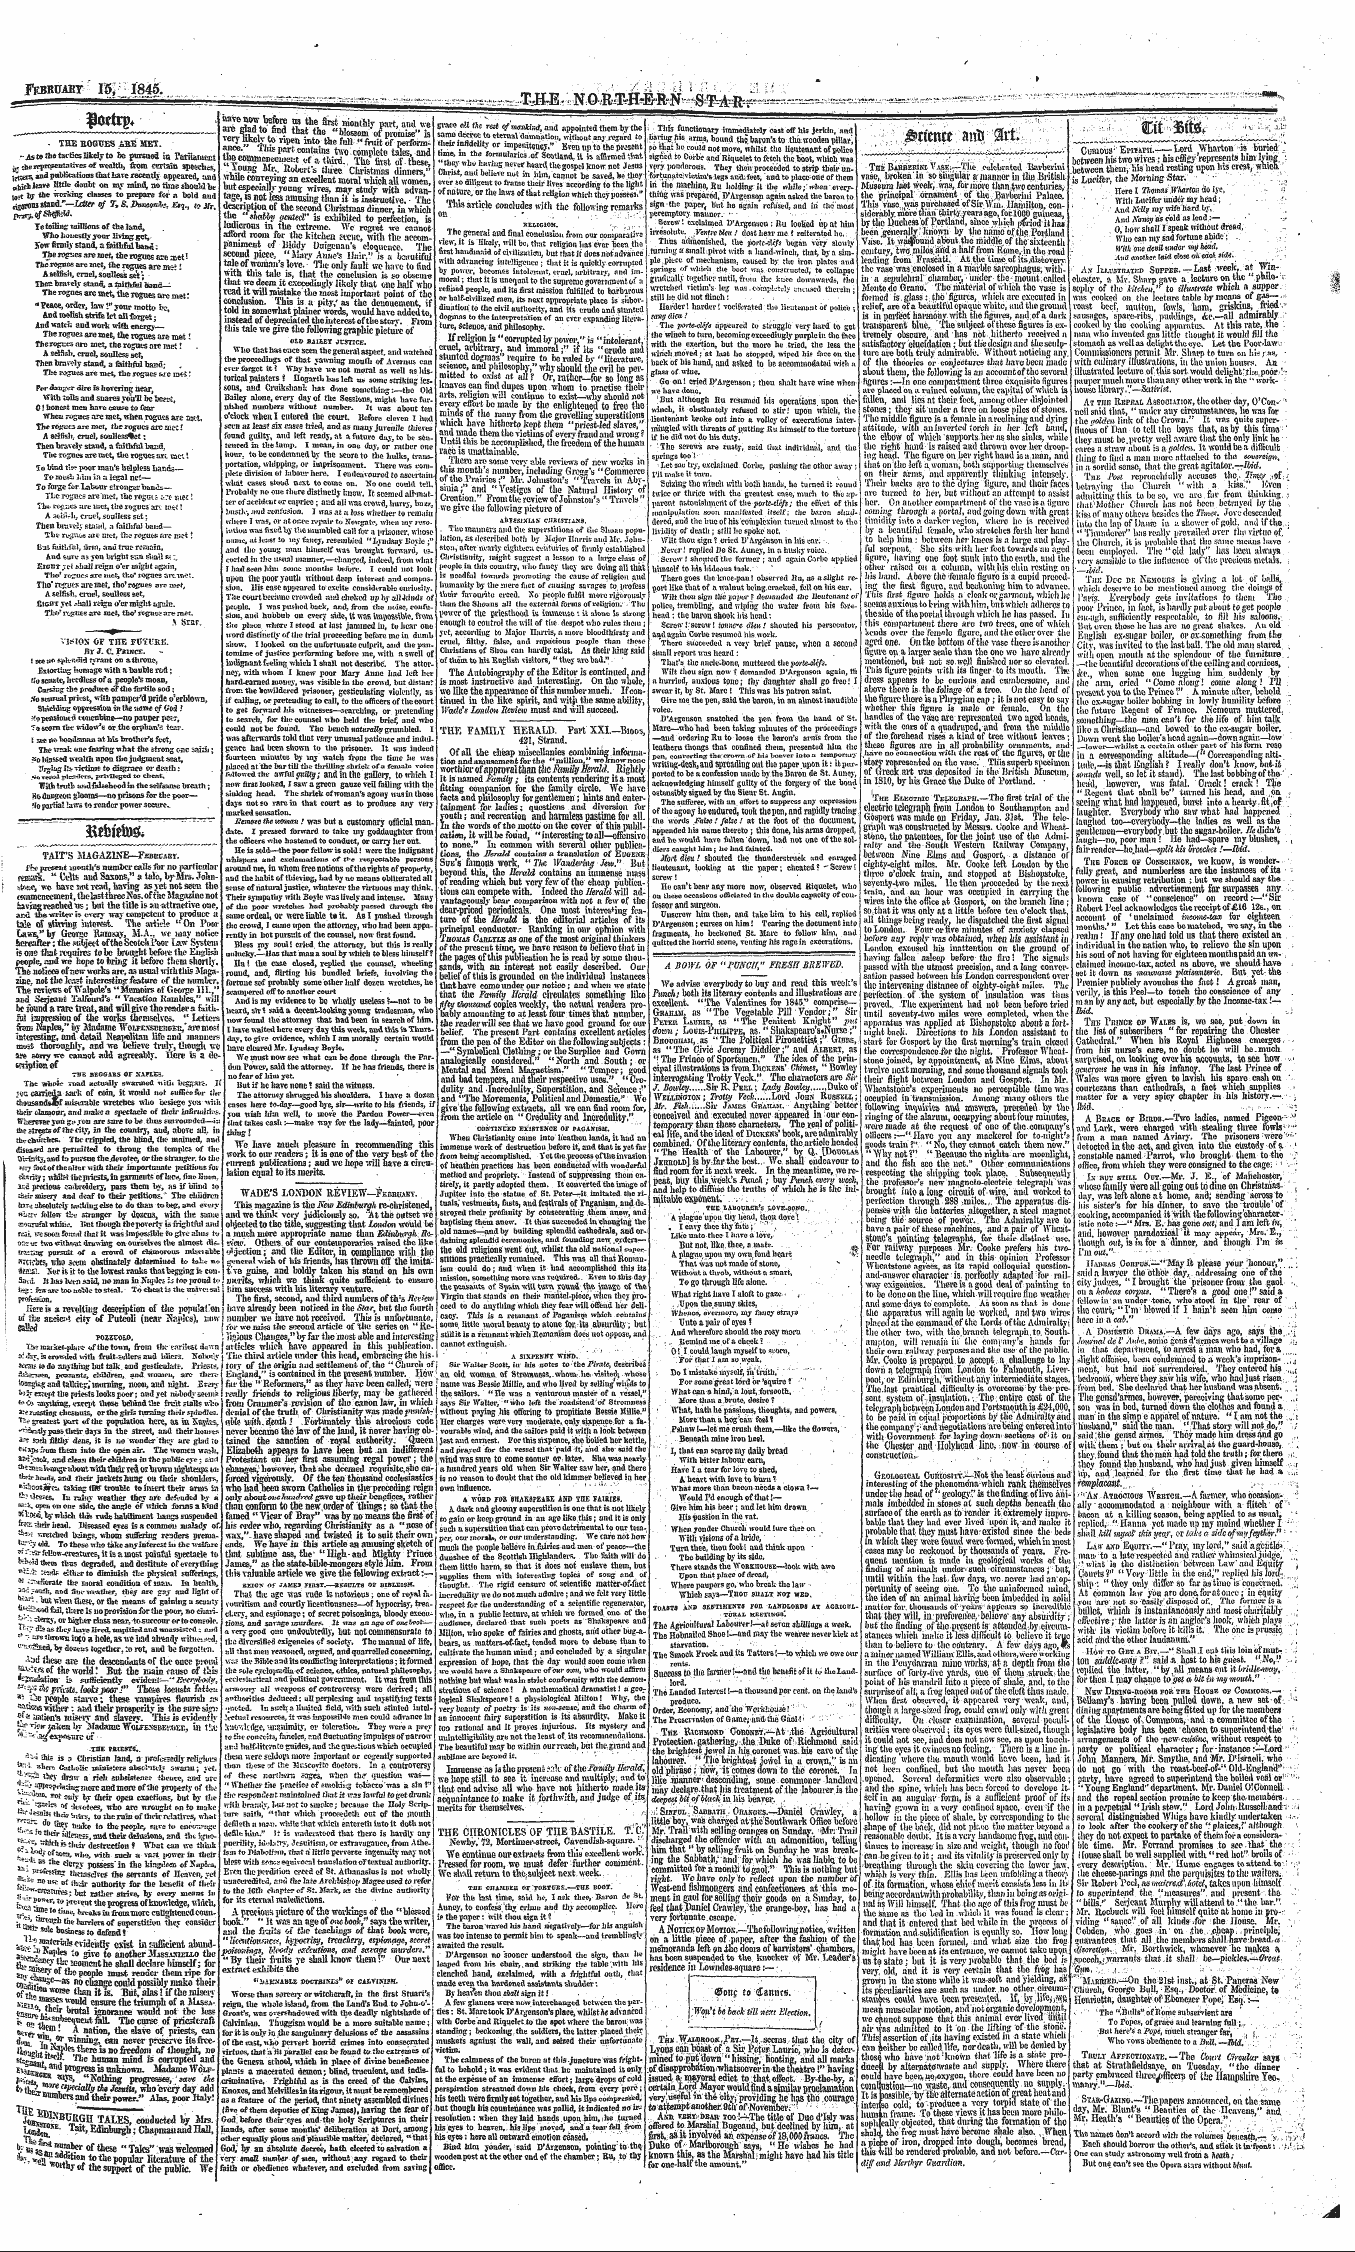 Northern Star (1837-1852): jS F Y, 4th edition - X&Titoa